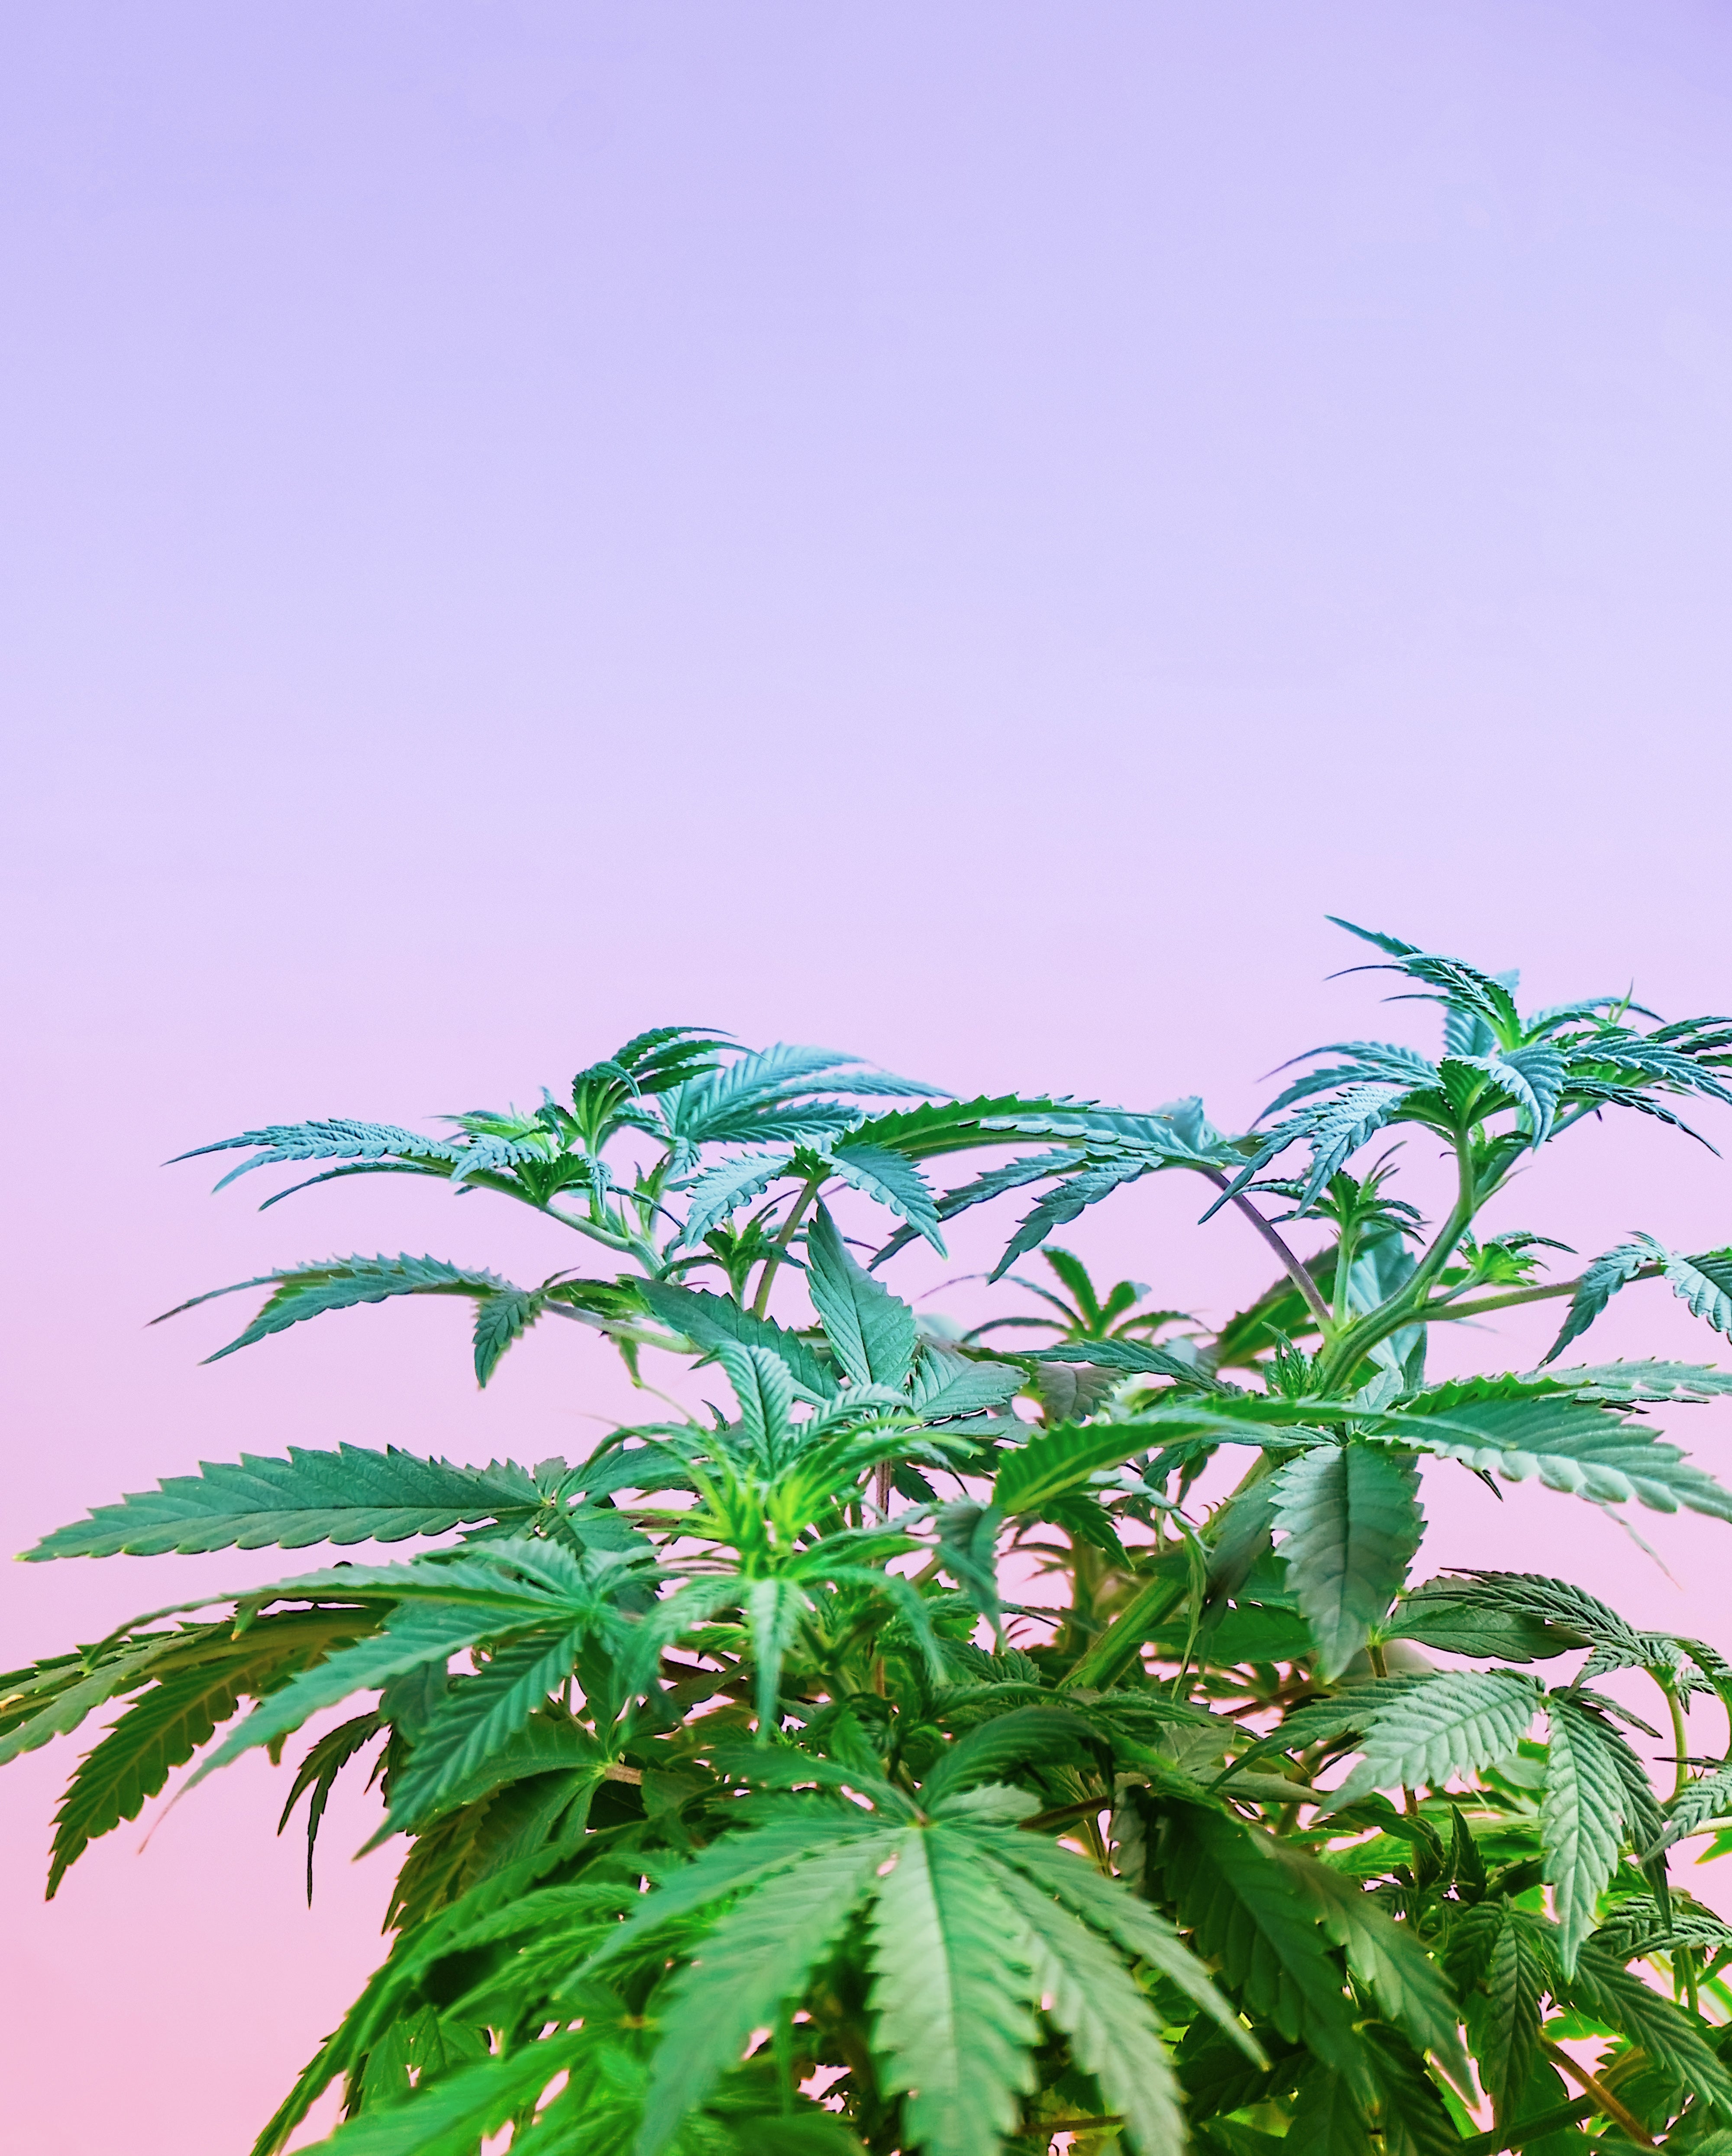 A cannabis plant stands beneath a purple pinkish sky.